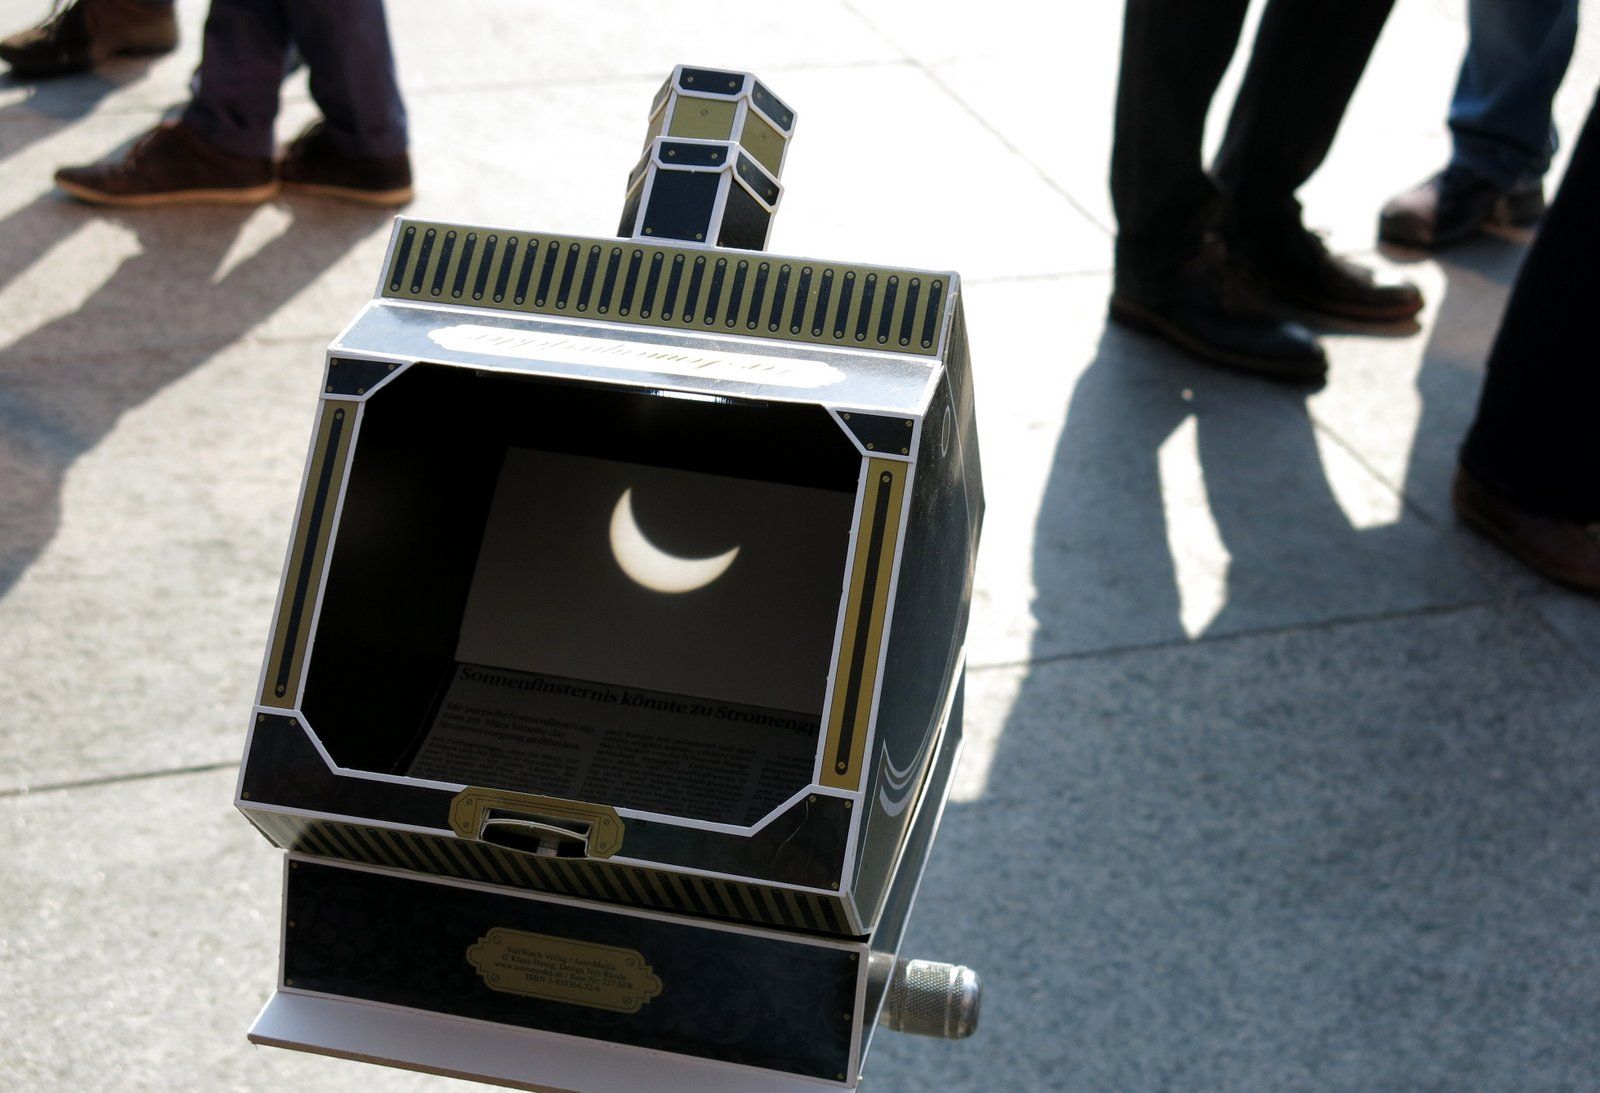 The Solar Projector - AstroMedia